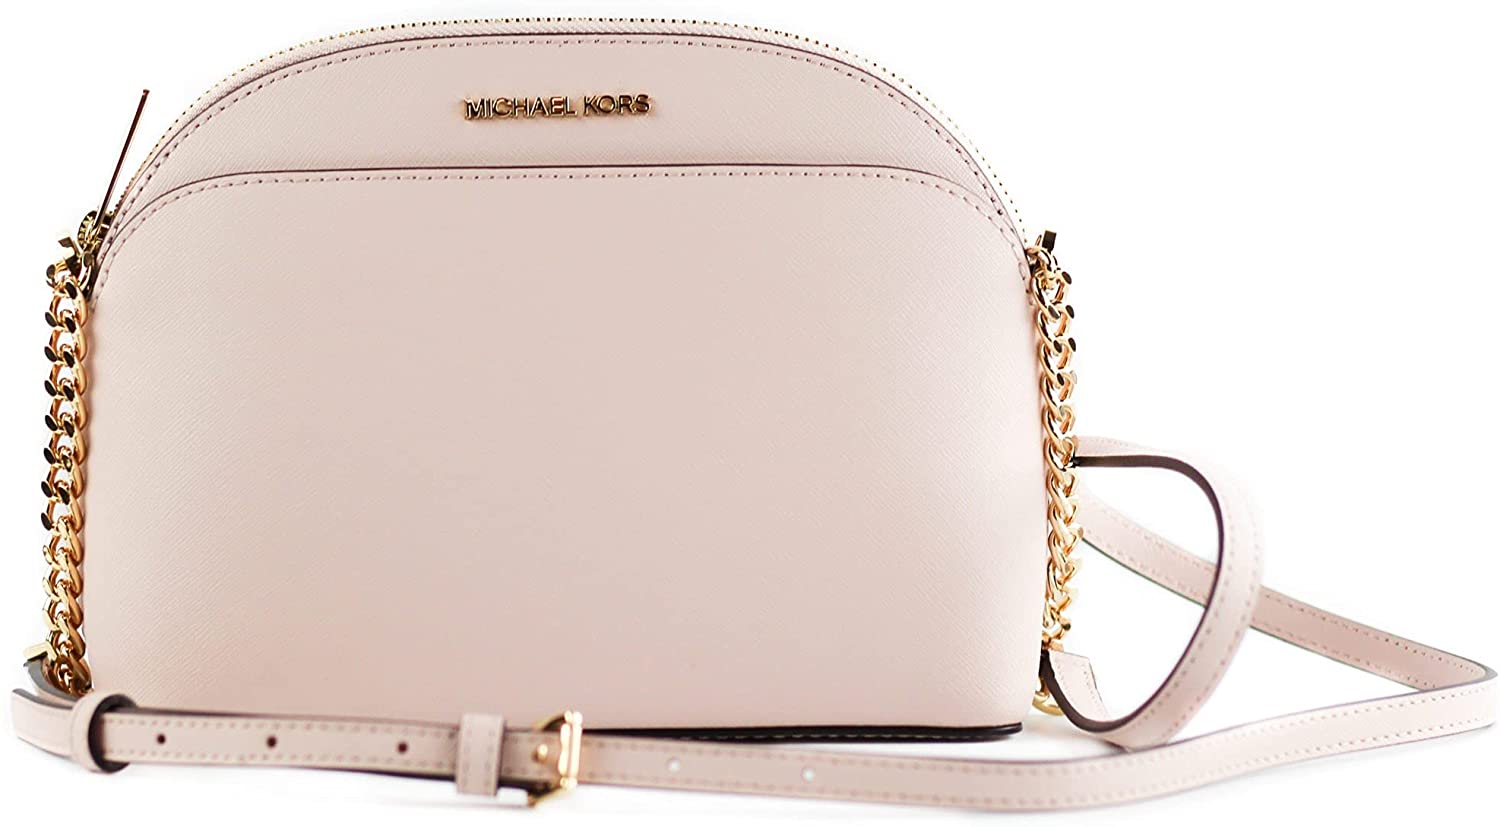 Michael Kors Emmy Saffiano Leather Medium Crossbody Bag | eBay